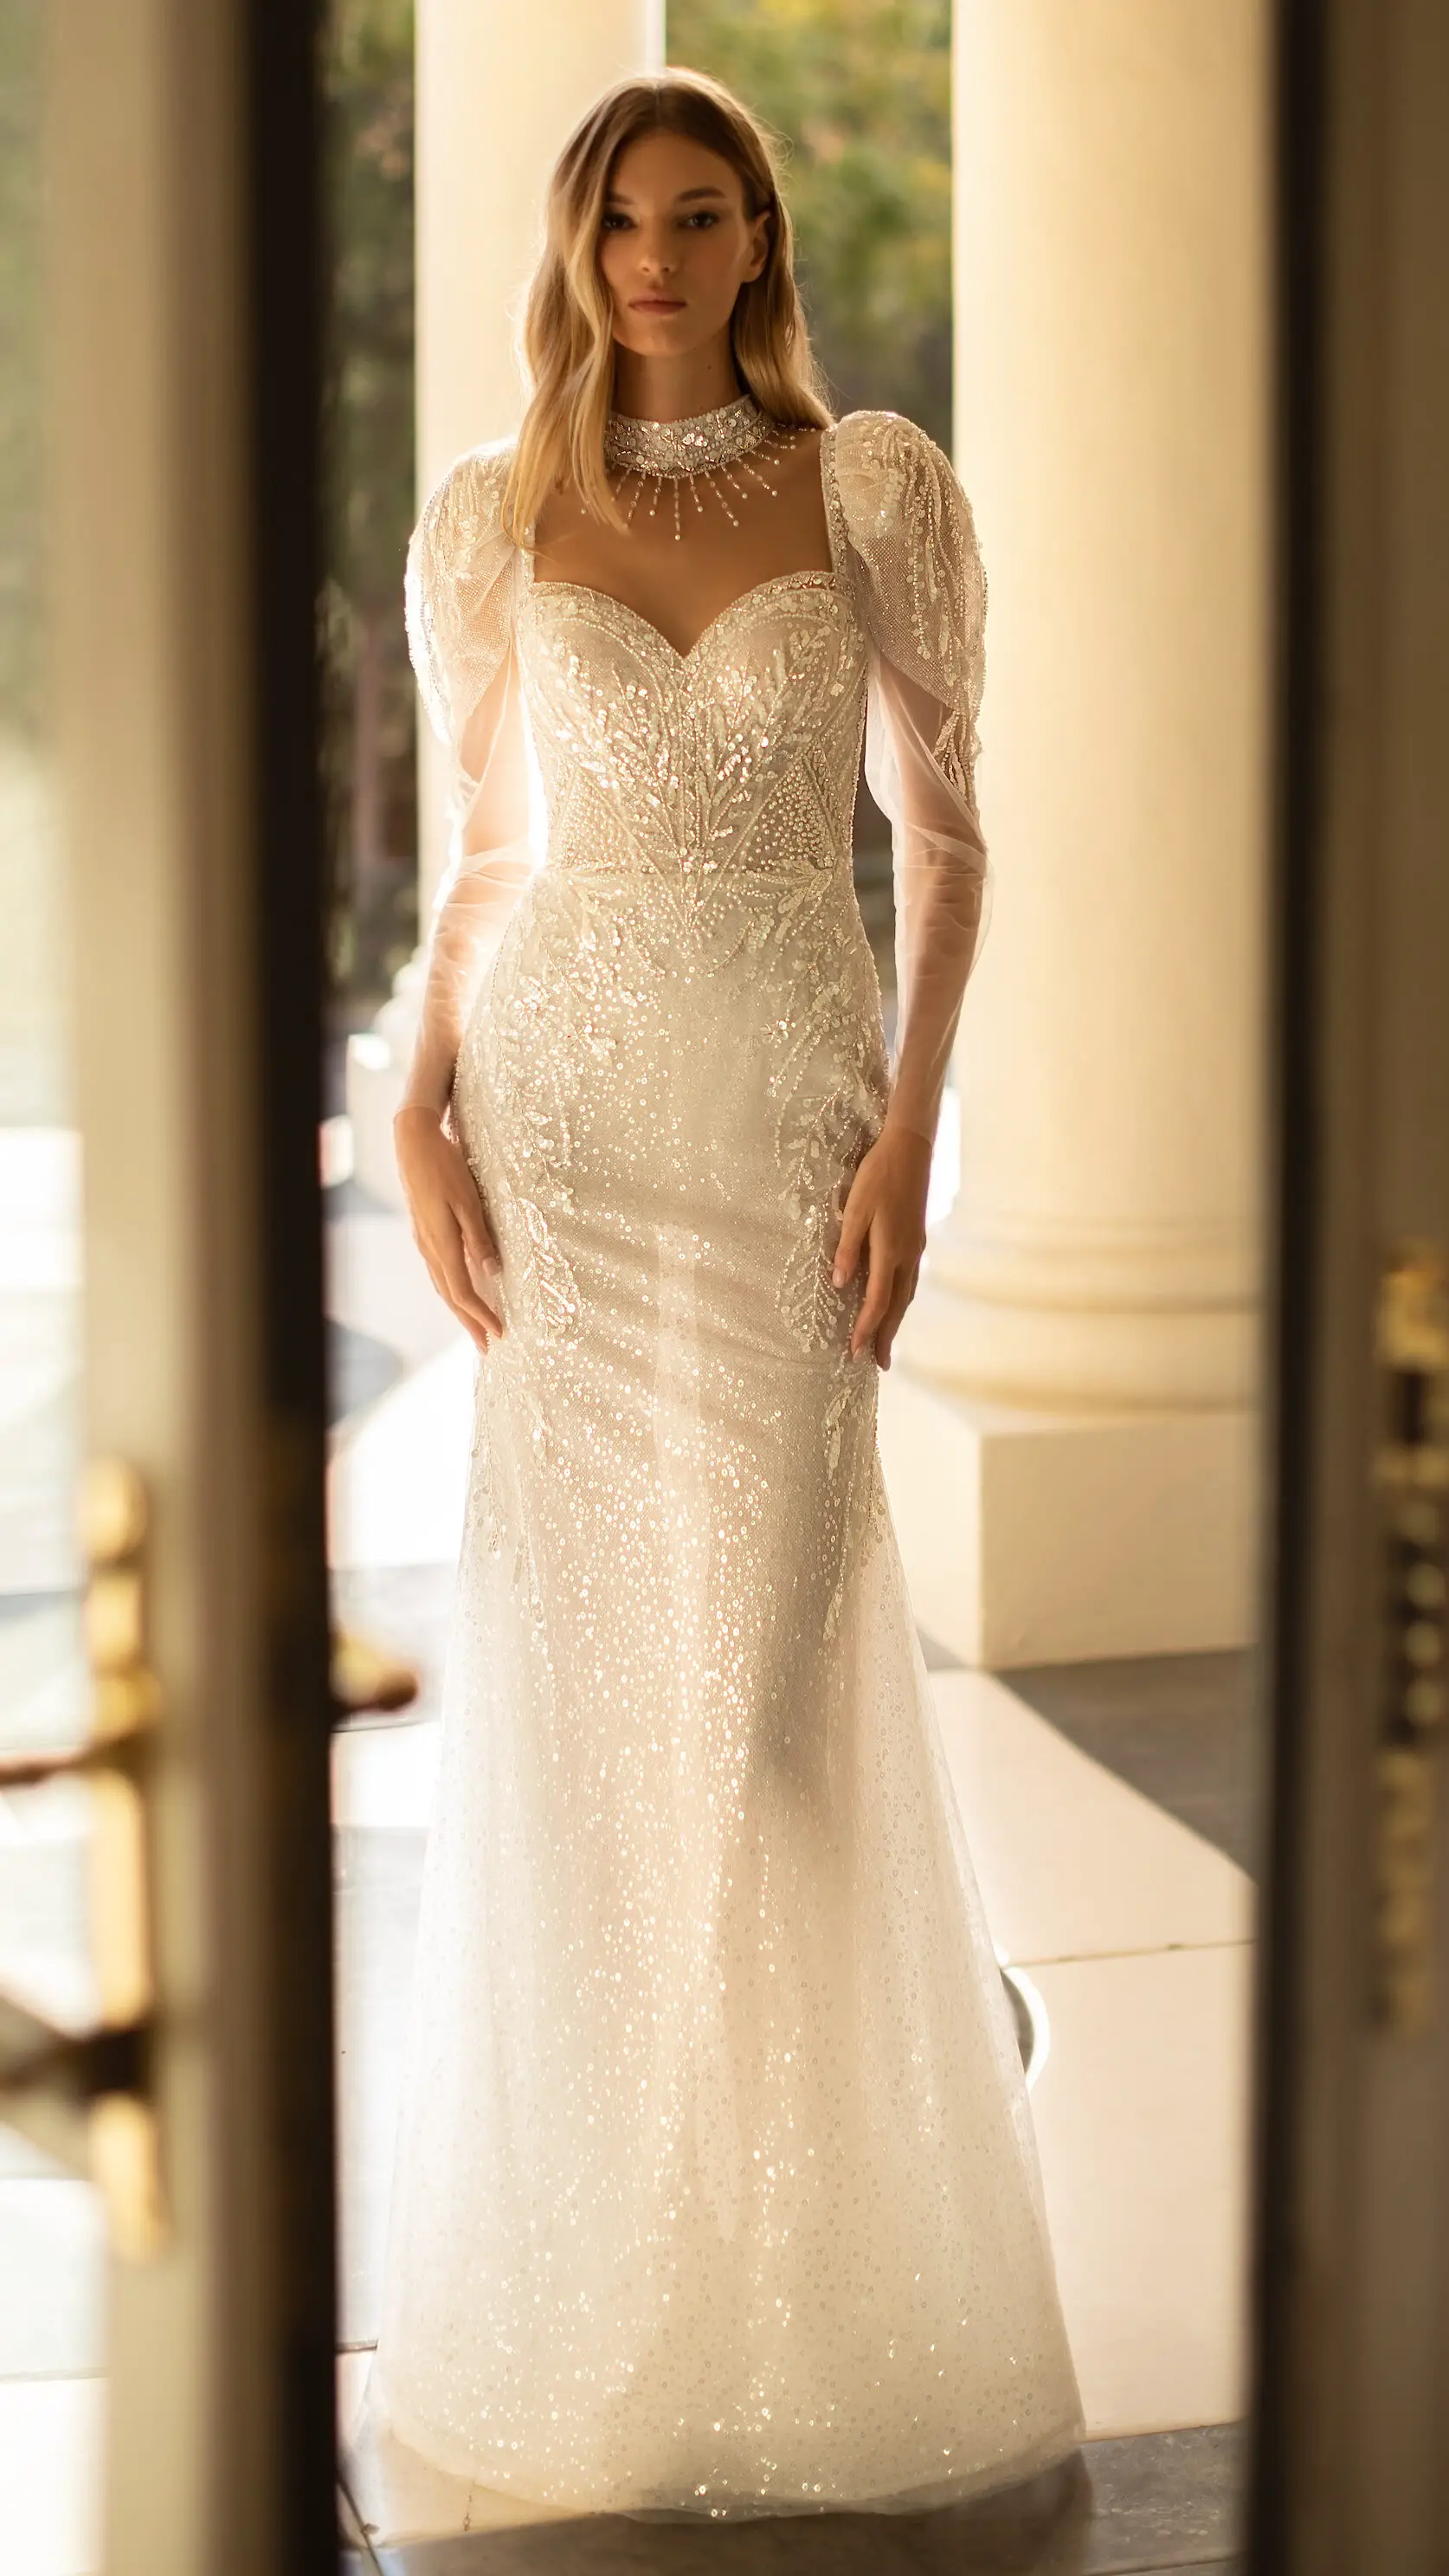 Cristina by Armonia wedding dress